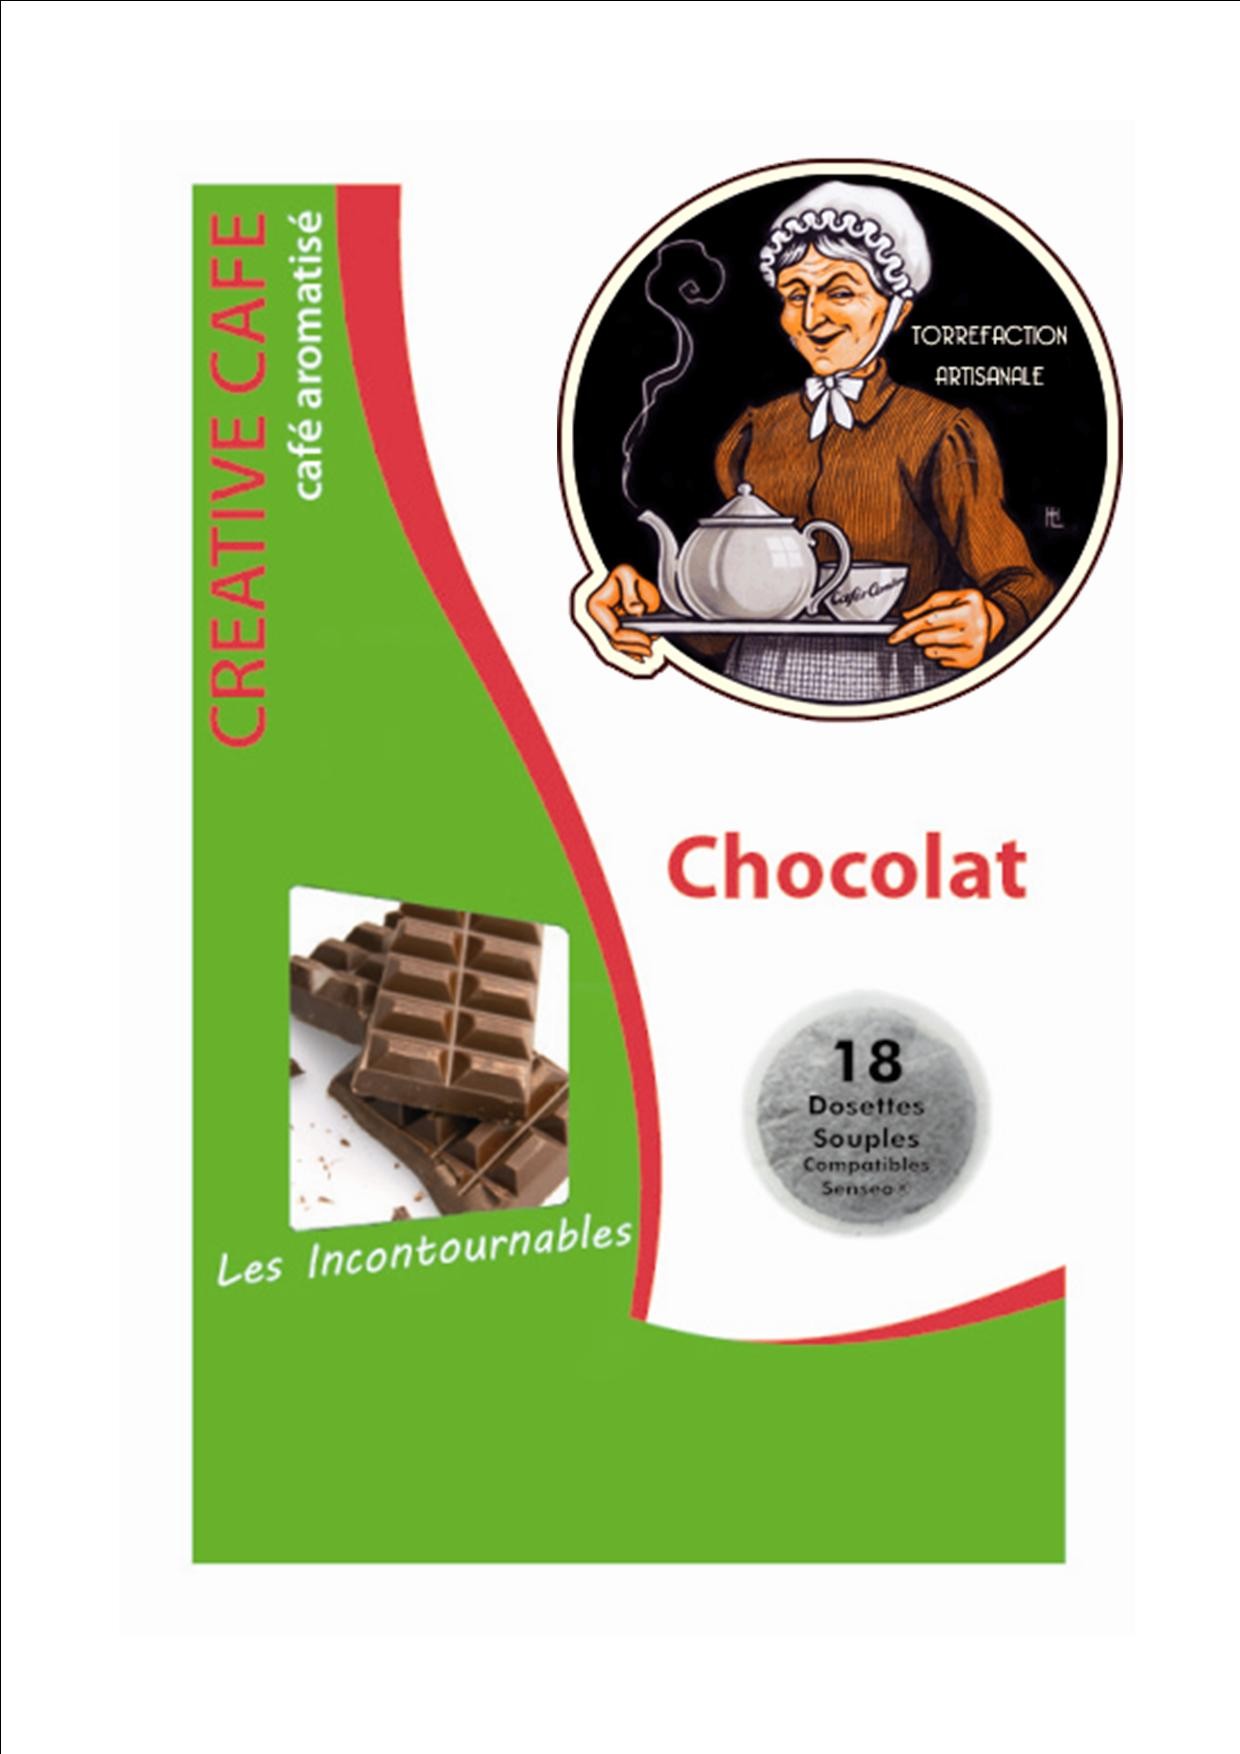 https://www.cafes-canton.com/96/dosettes-cafe-aromatise-au-chocolat-type-senseo-par-18.jpg